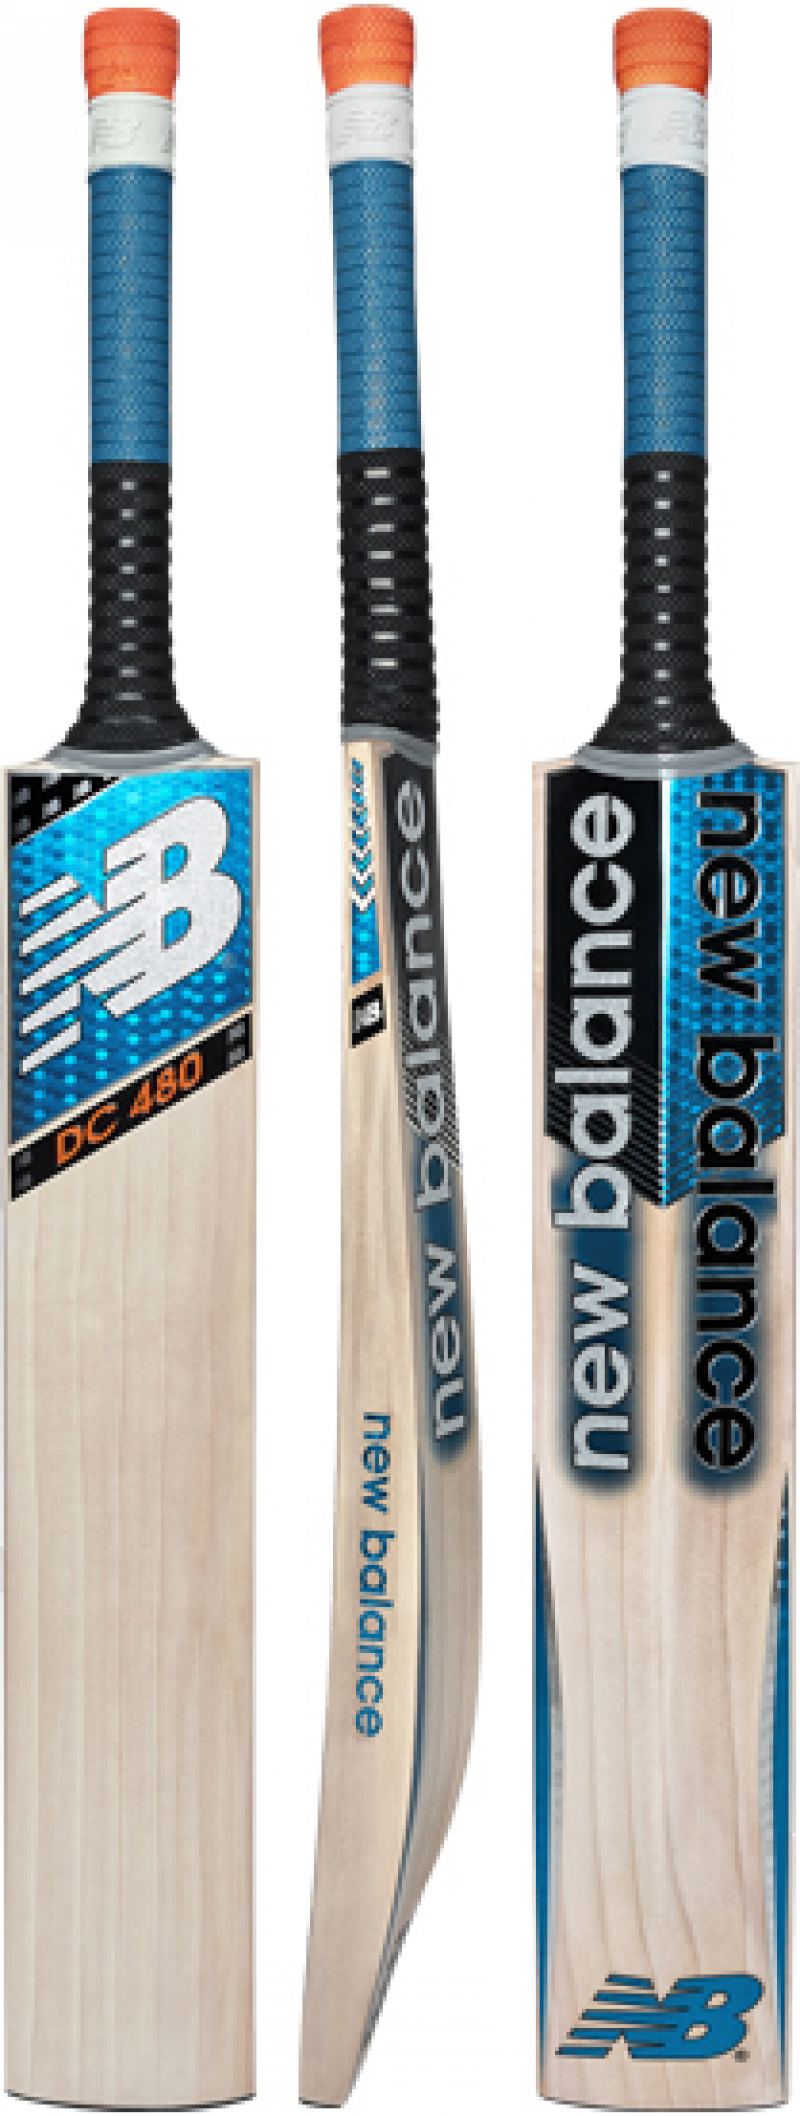 new balance dc 480 cricket bat